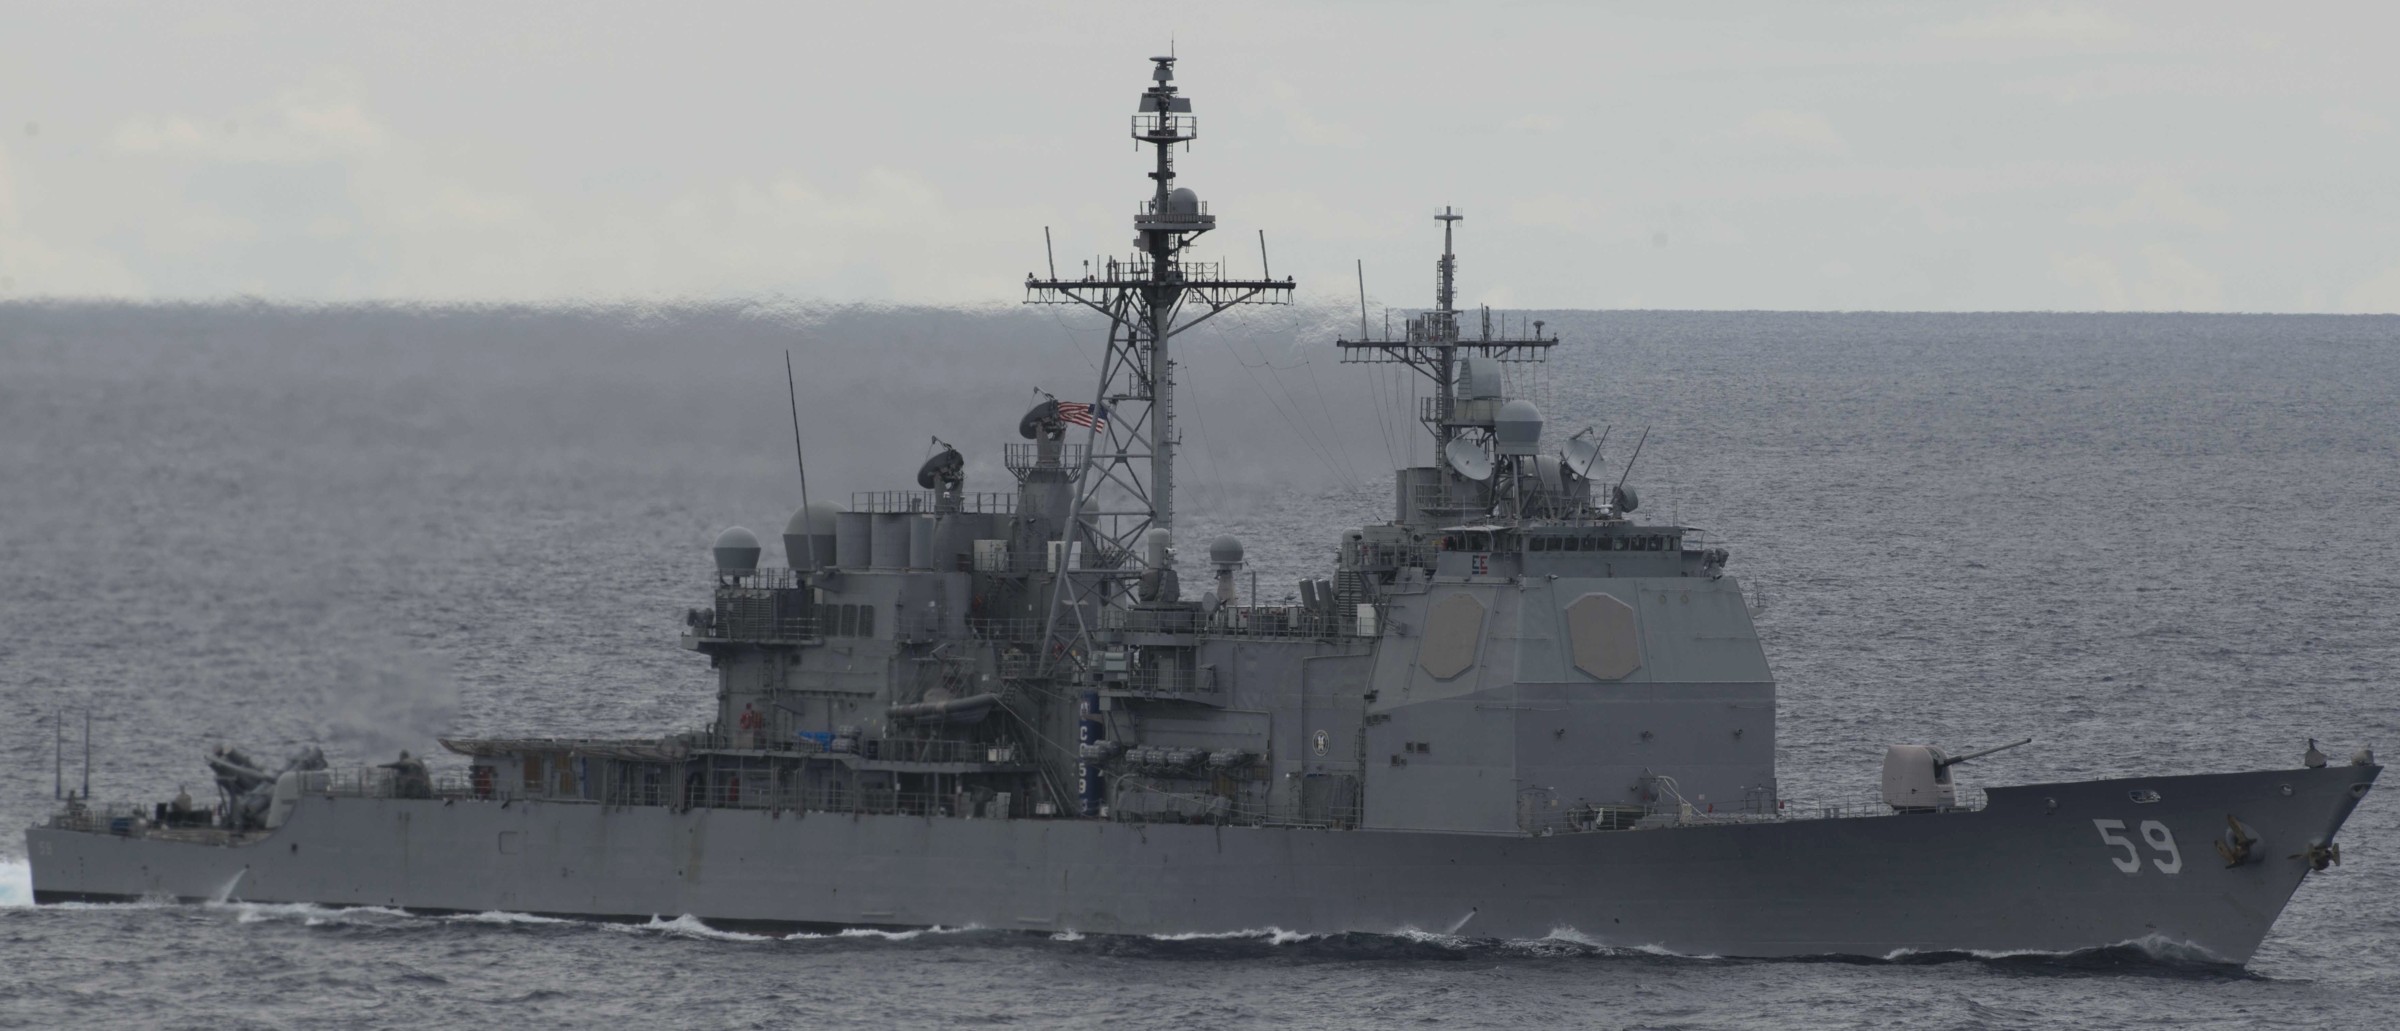 cg-59 uss princeton ticonderoga class guided missile cruiser aegis us navy south china sea 95